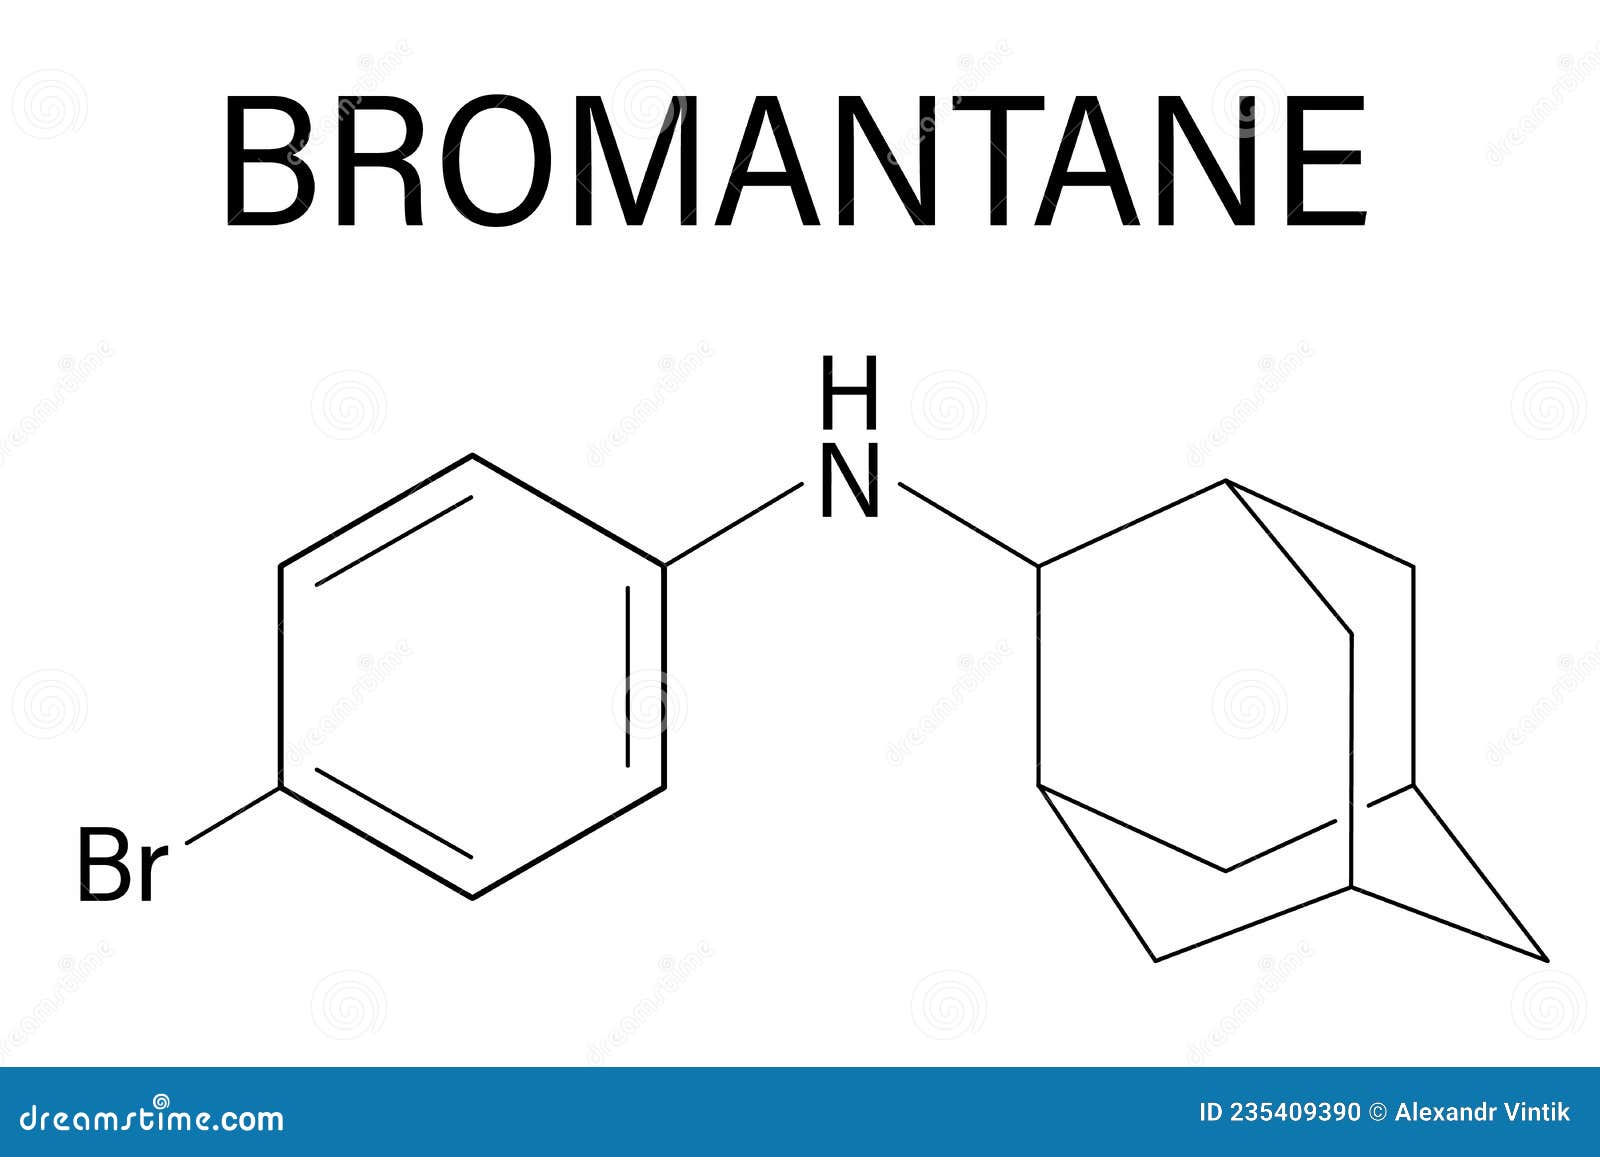 bromantane asthenia drug molecule. also used in sports doping. skeletal formula.